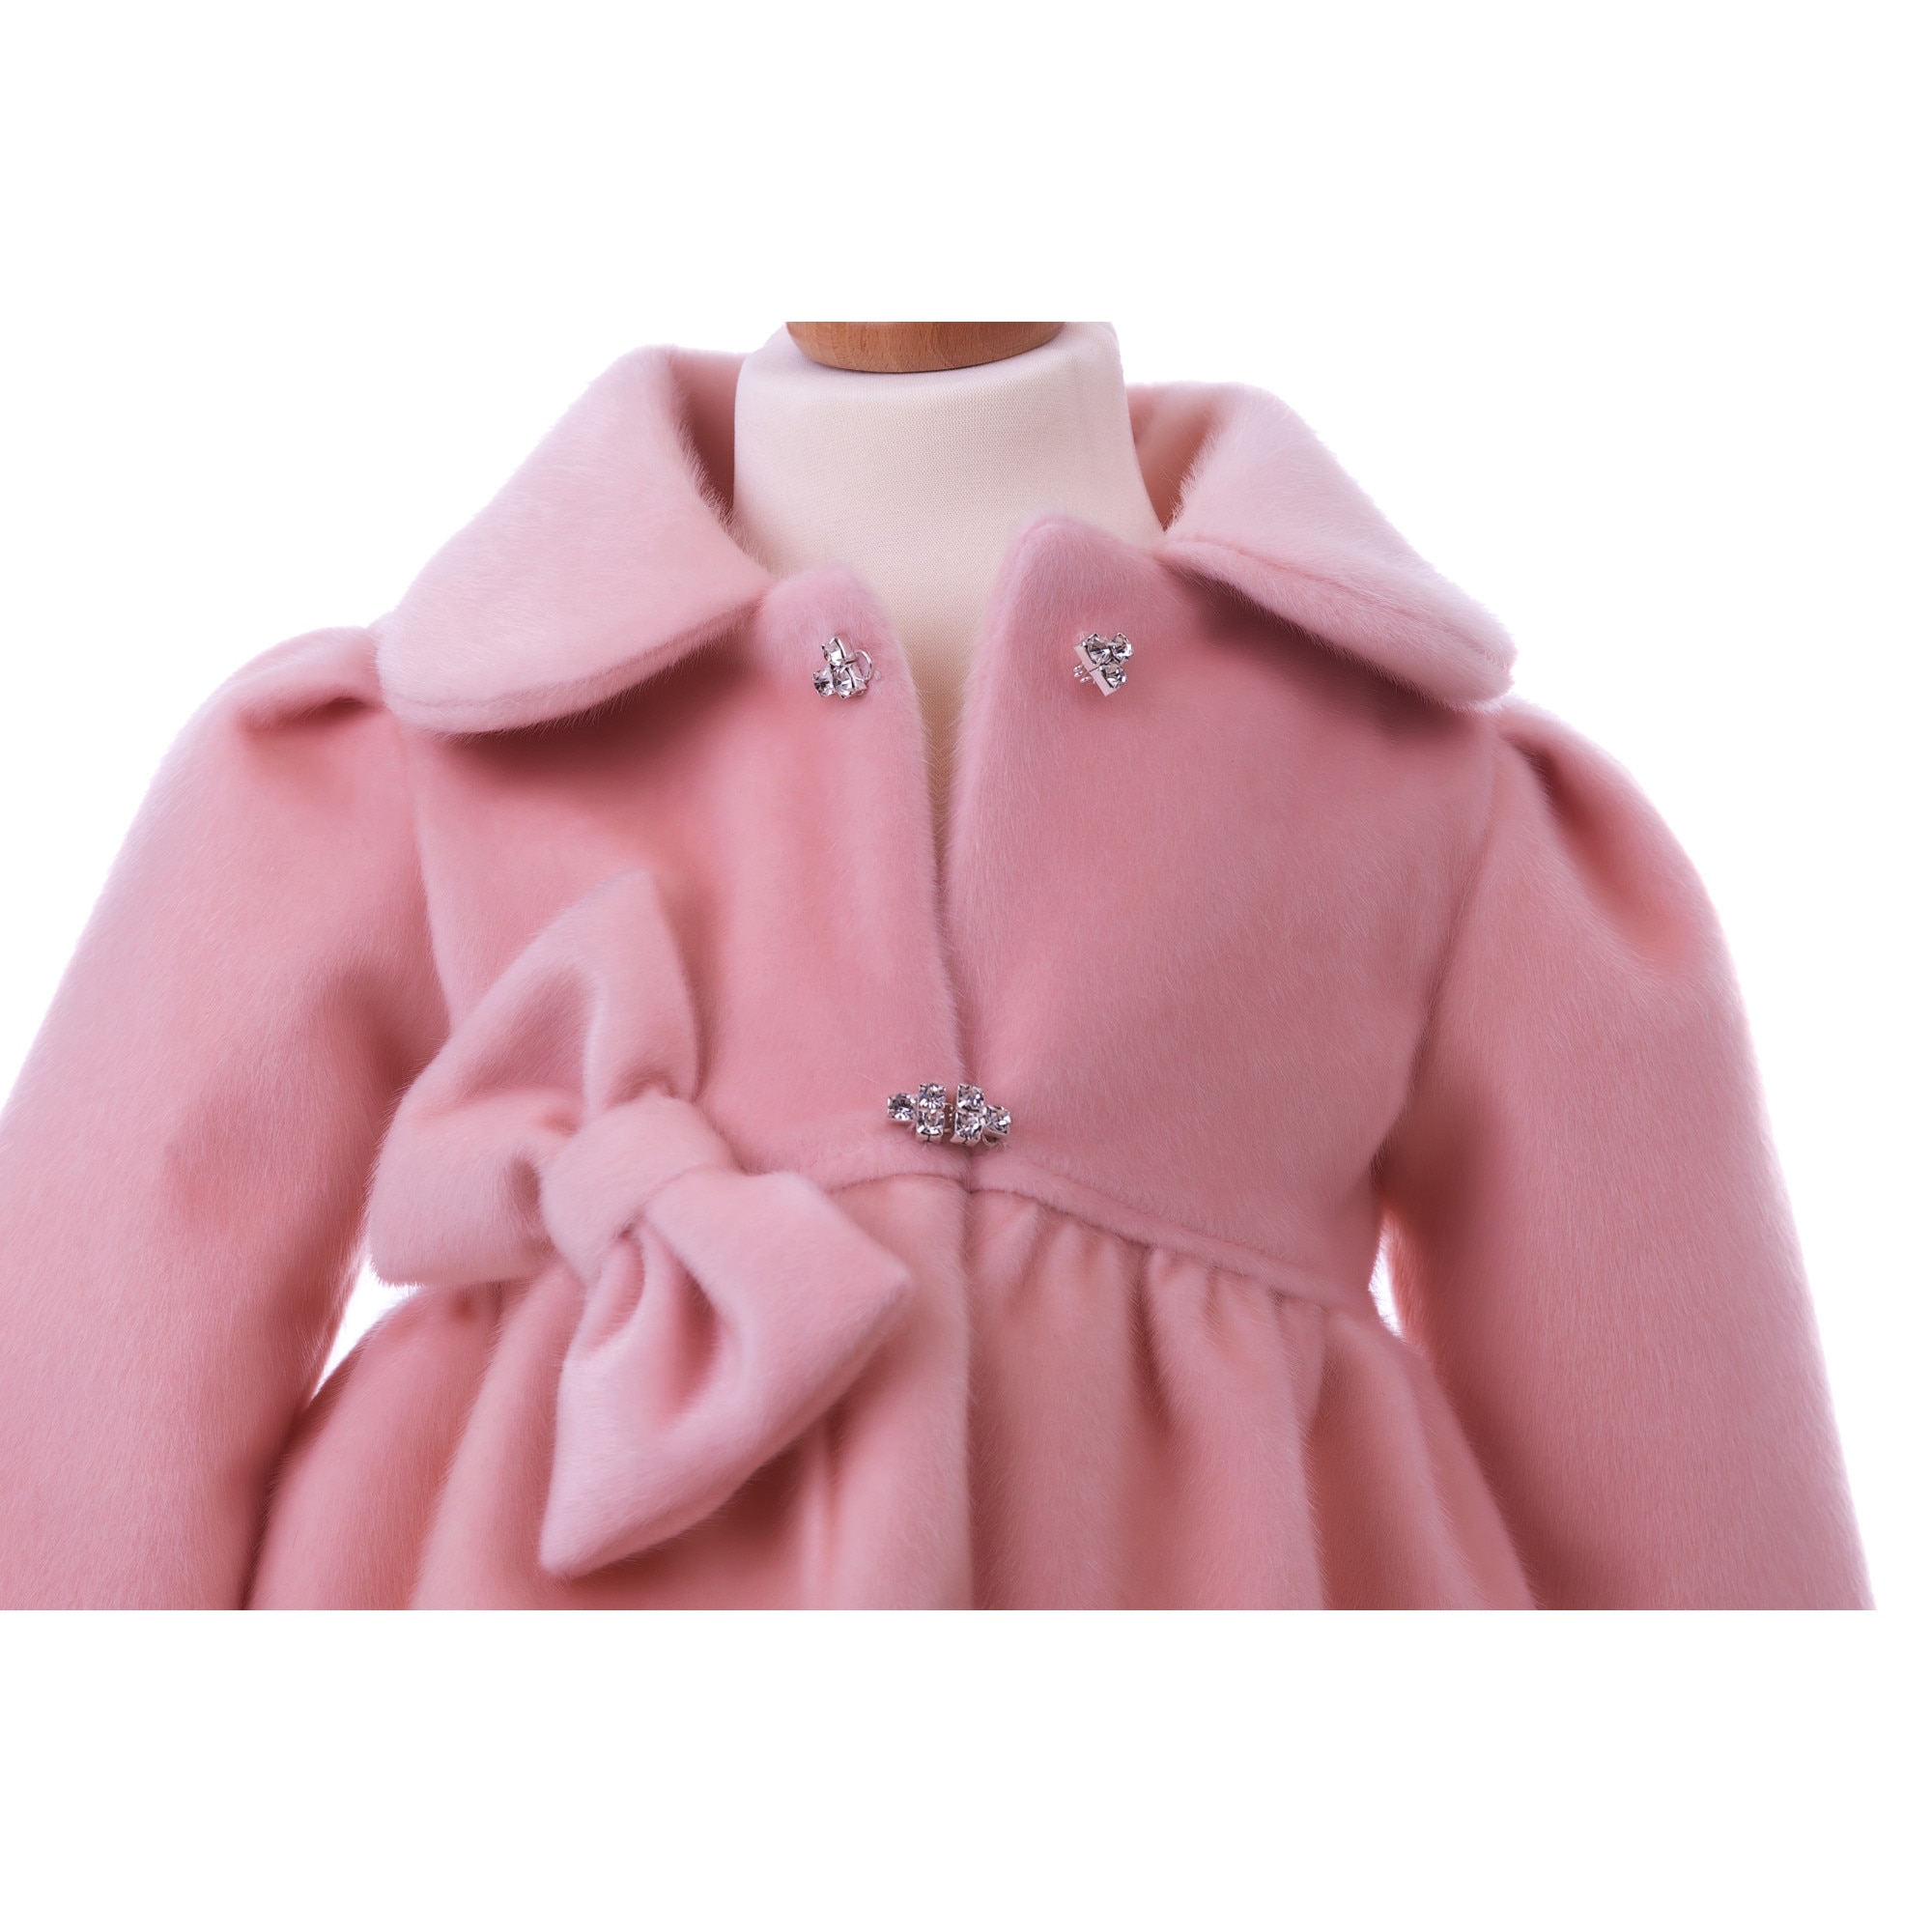 Palton fetita, Bebe, roz, model 1-2 ani - eMAG.ro